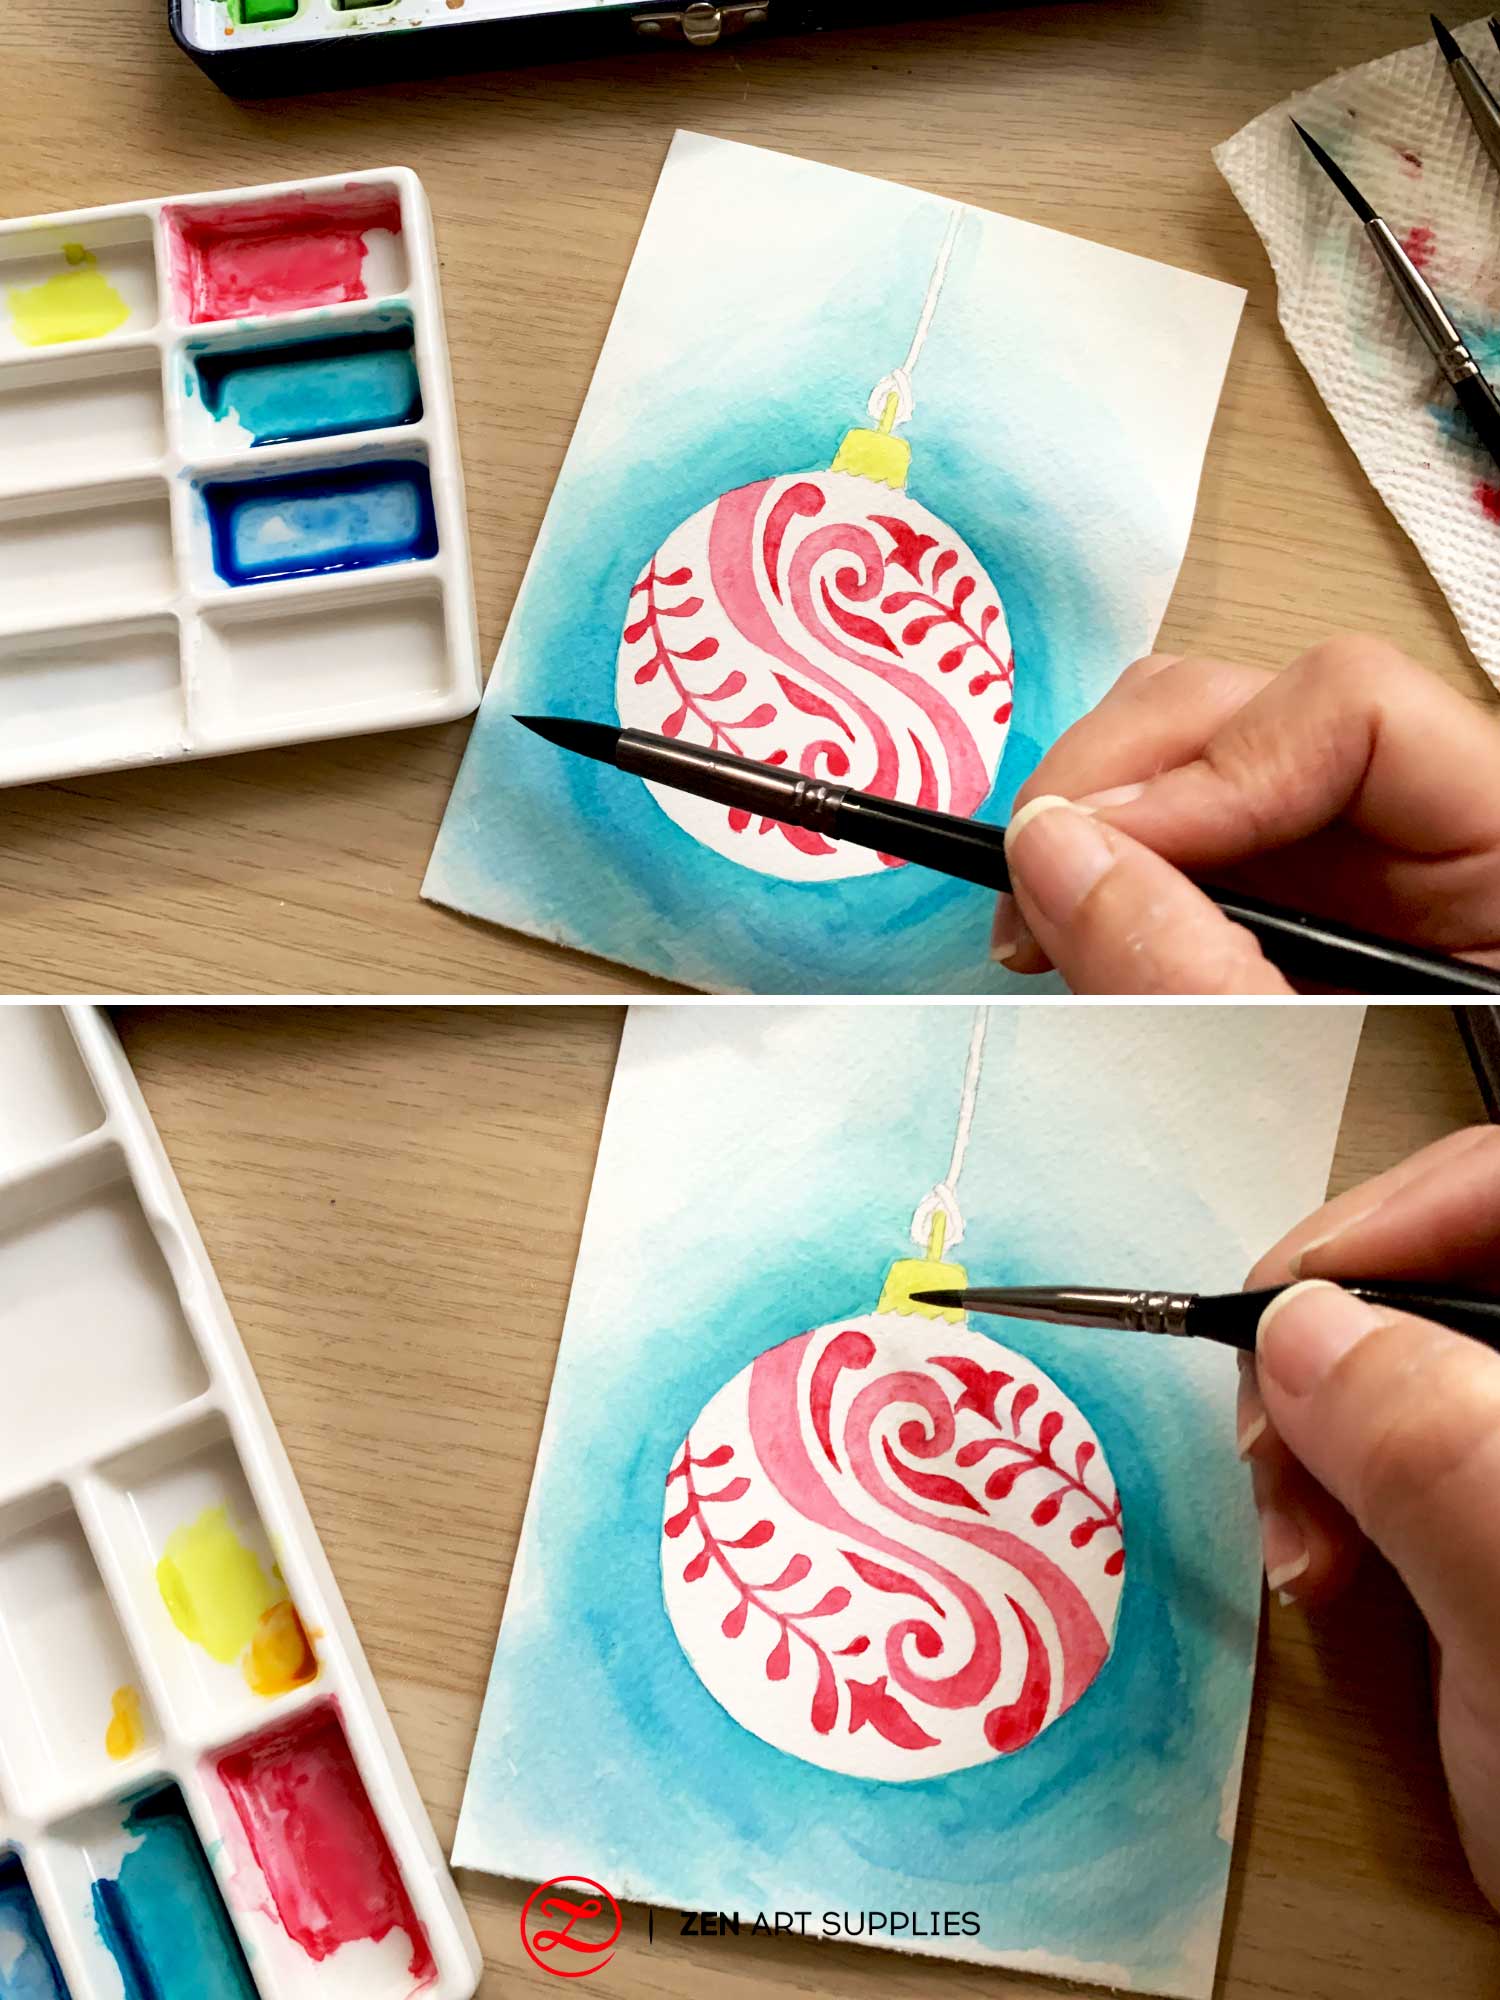 Watercolor Christmas Cards Ideas You Can Paint – ZenARTSupplies ...